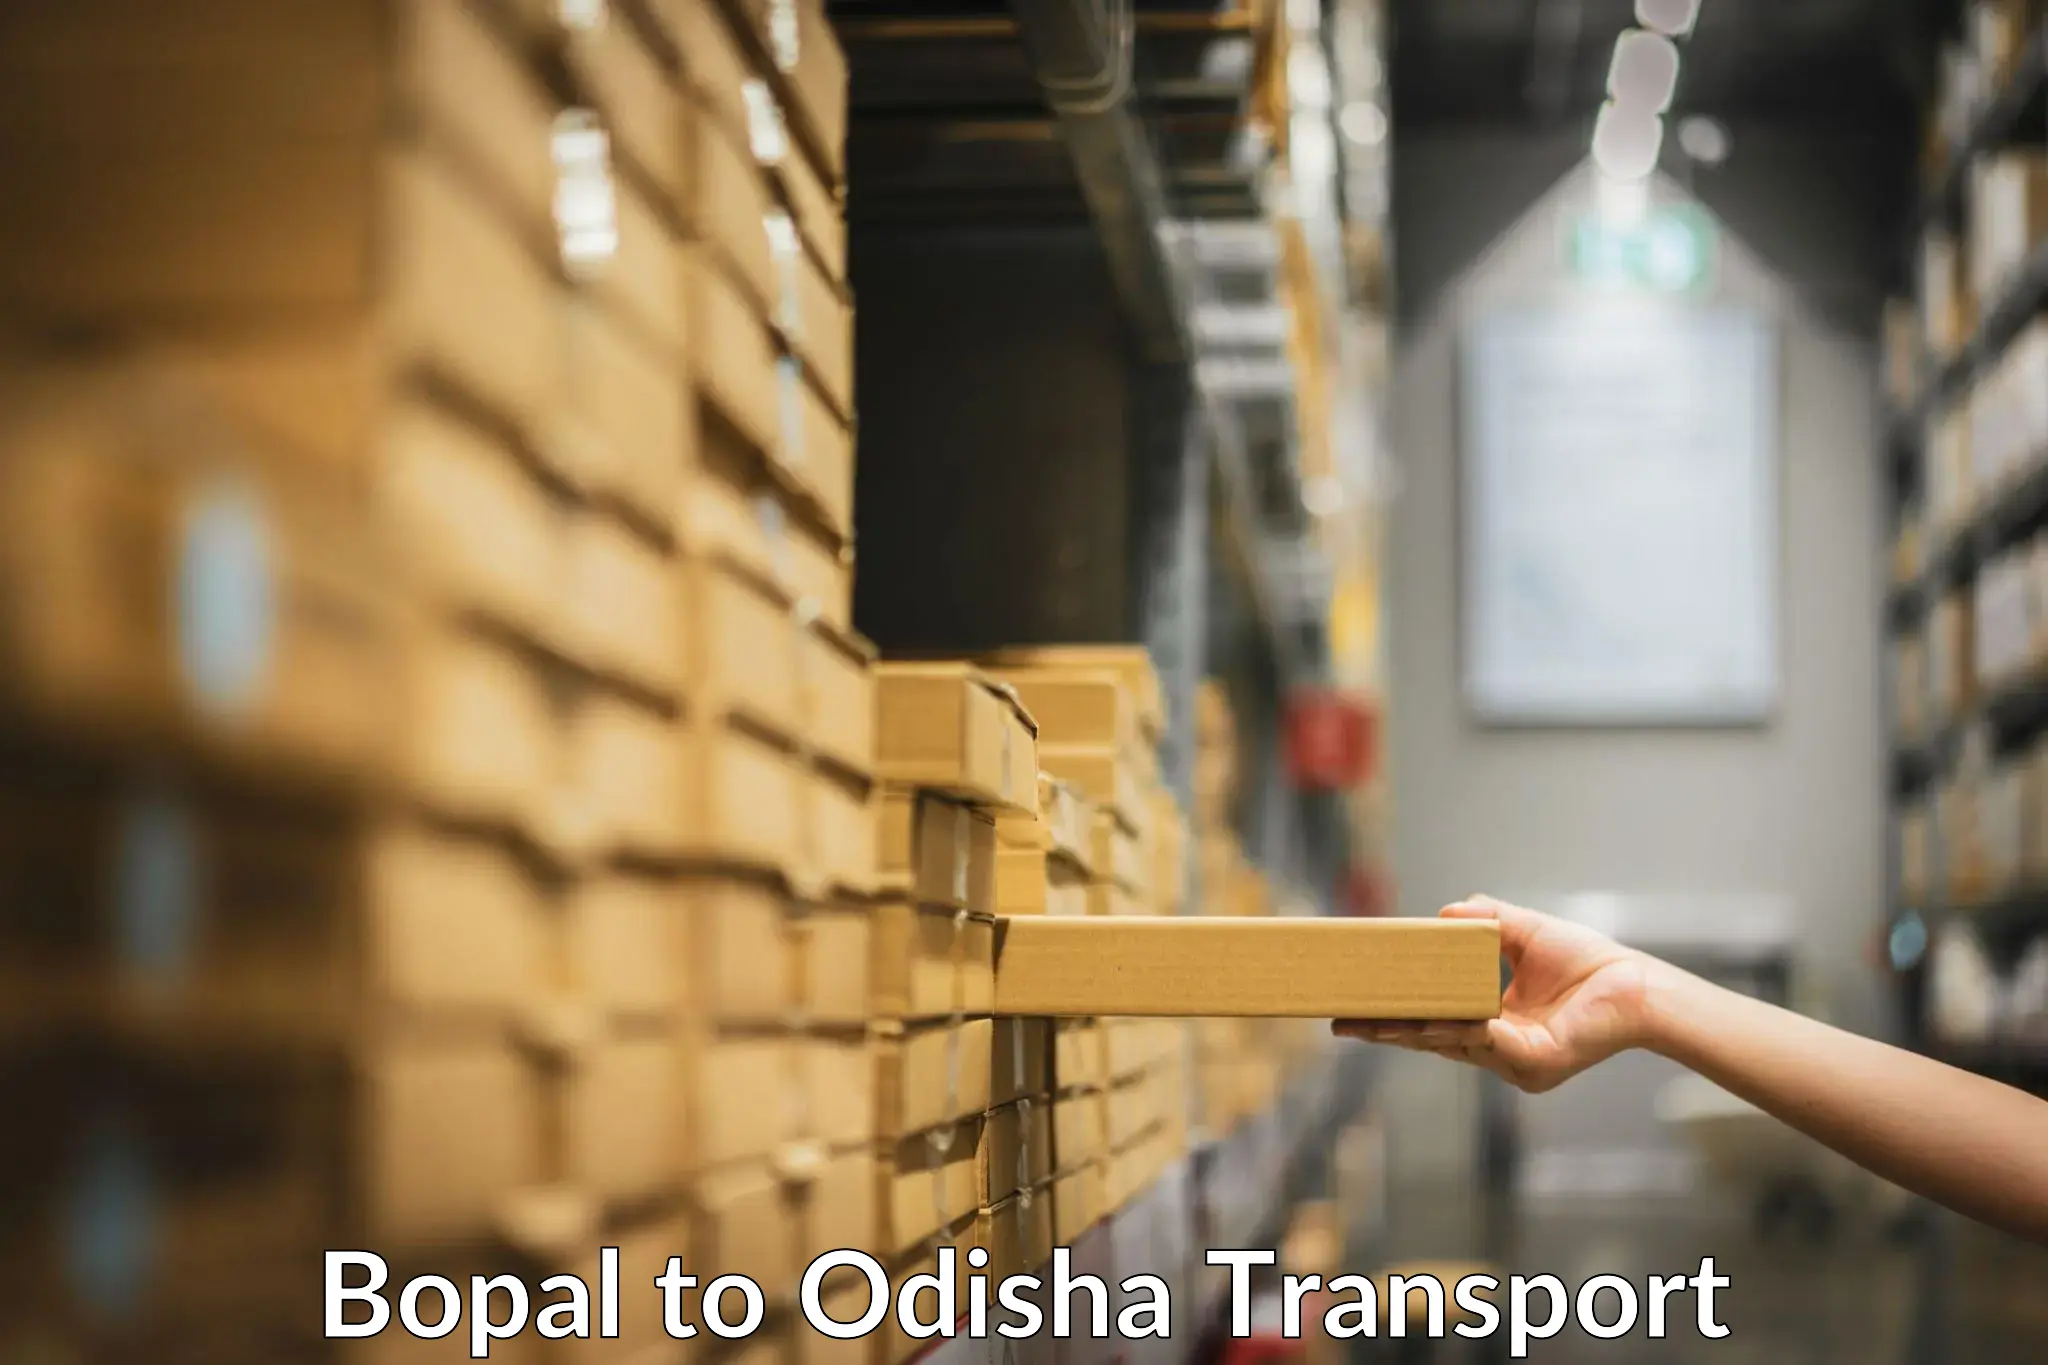 Truck transport companies in India Bopal to Nirakarpur